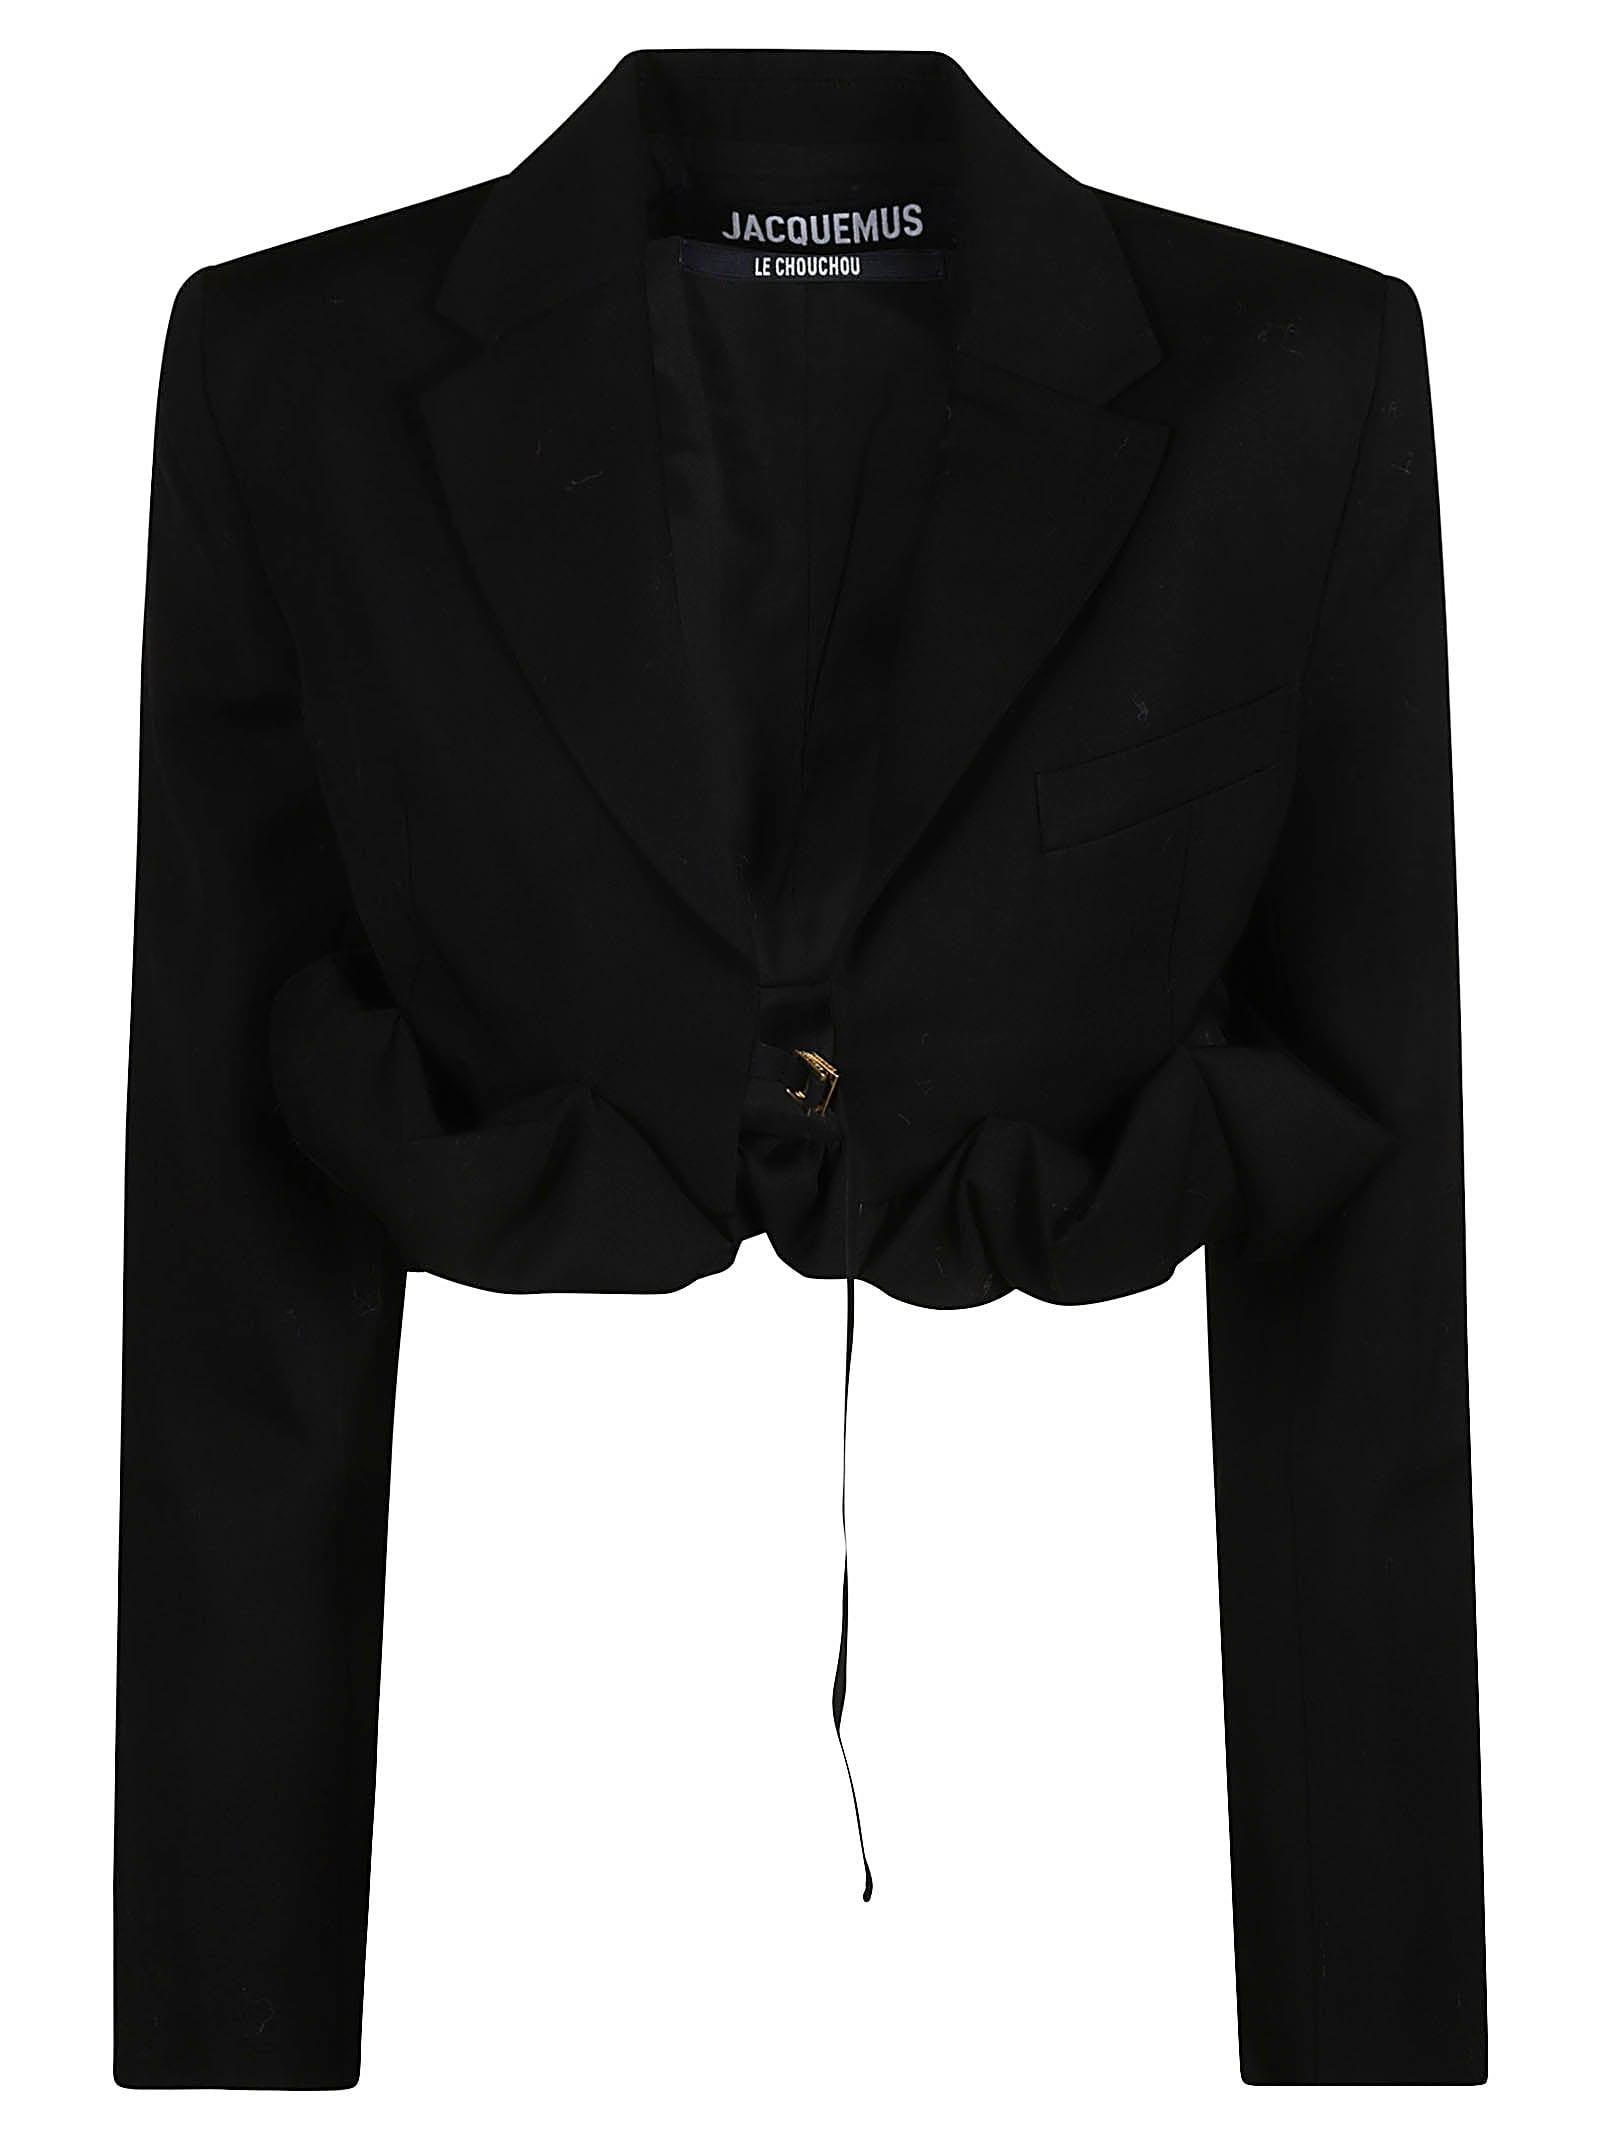 Jacquemus Croissant Vest in Black | Lyst